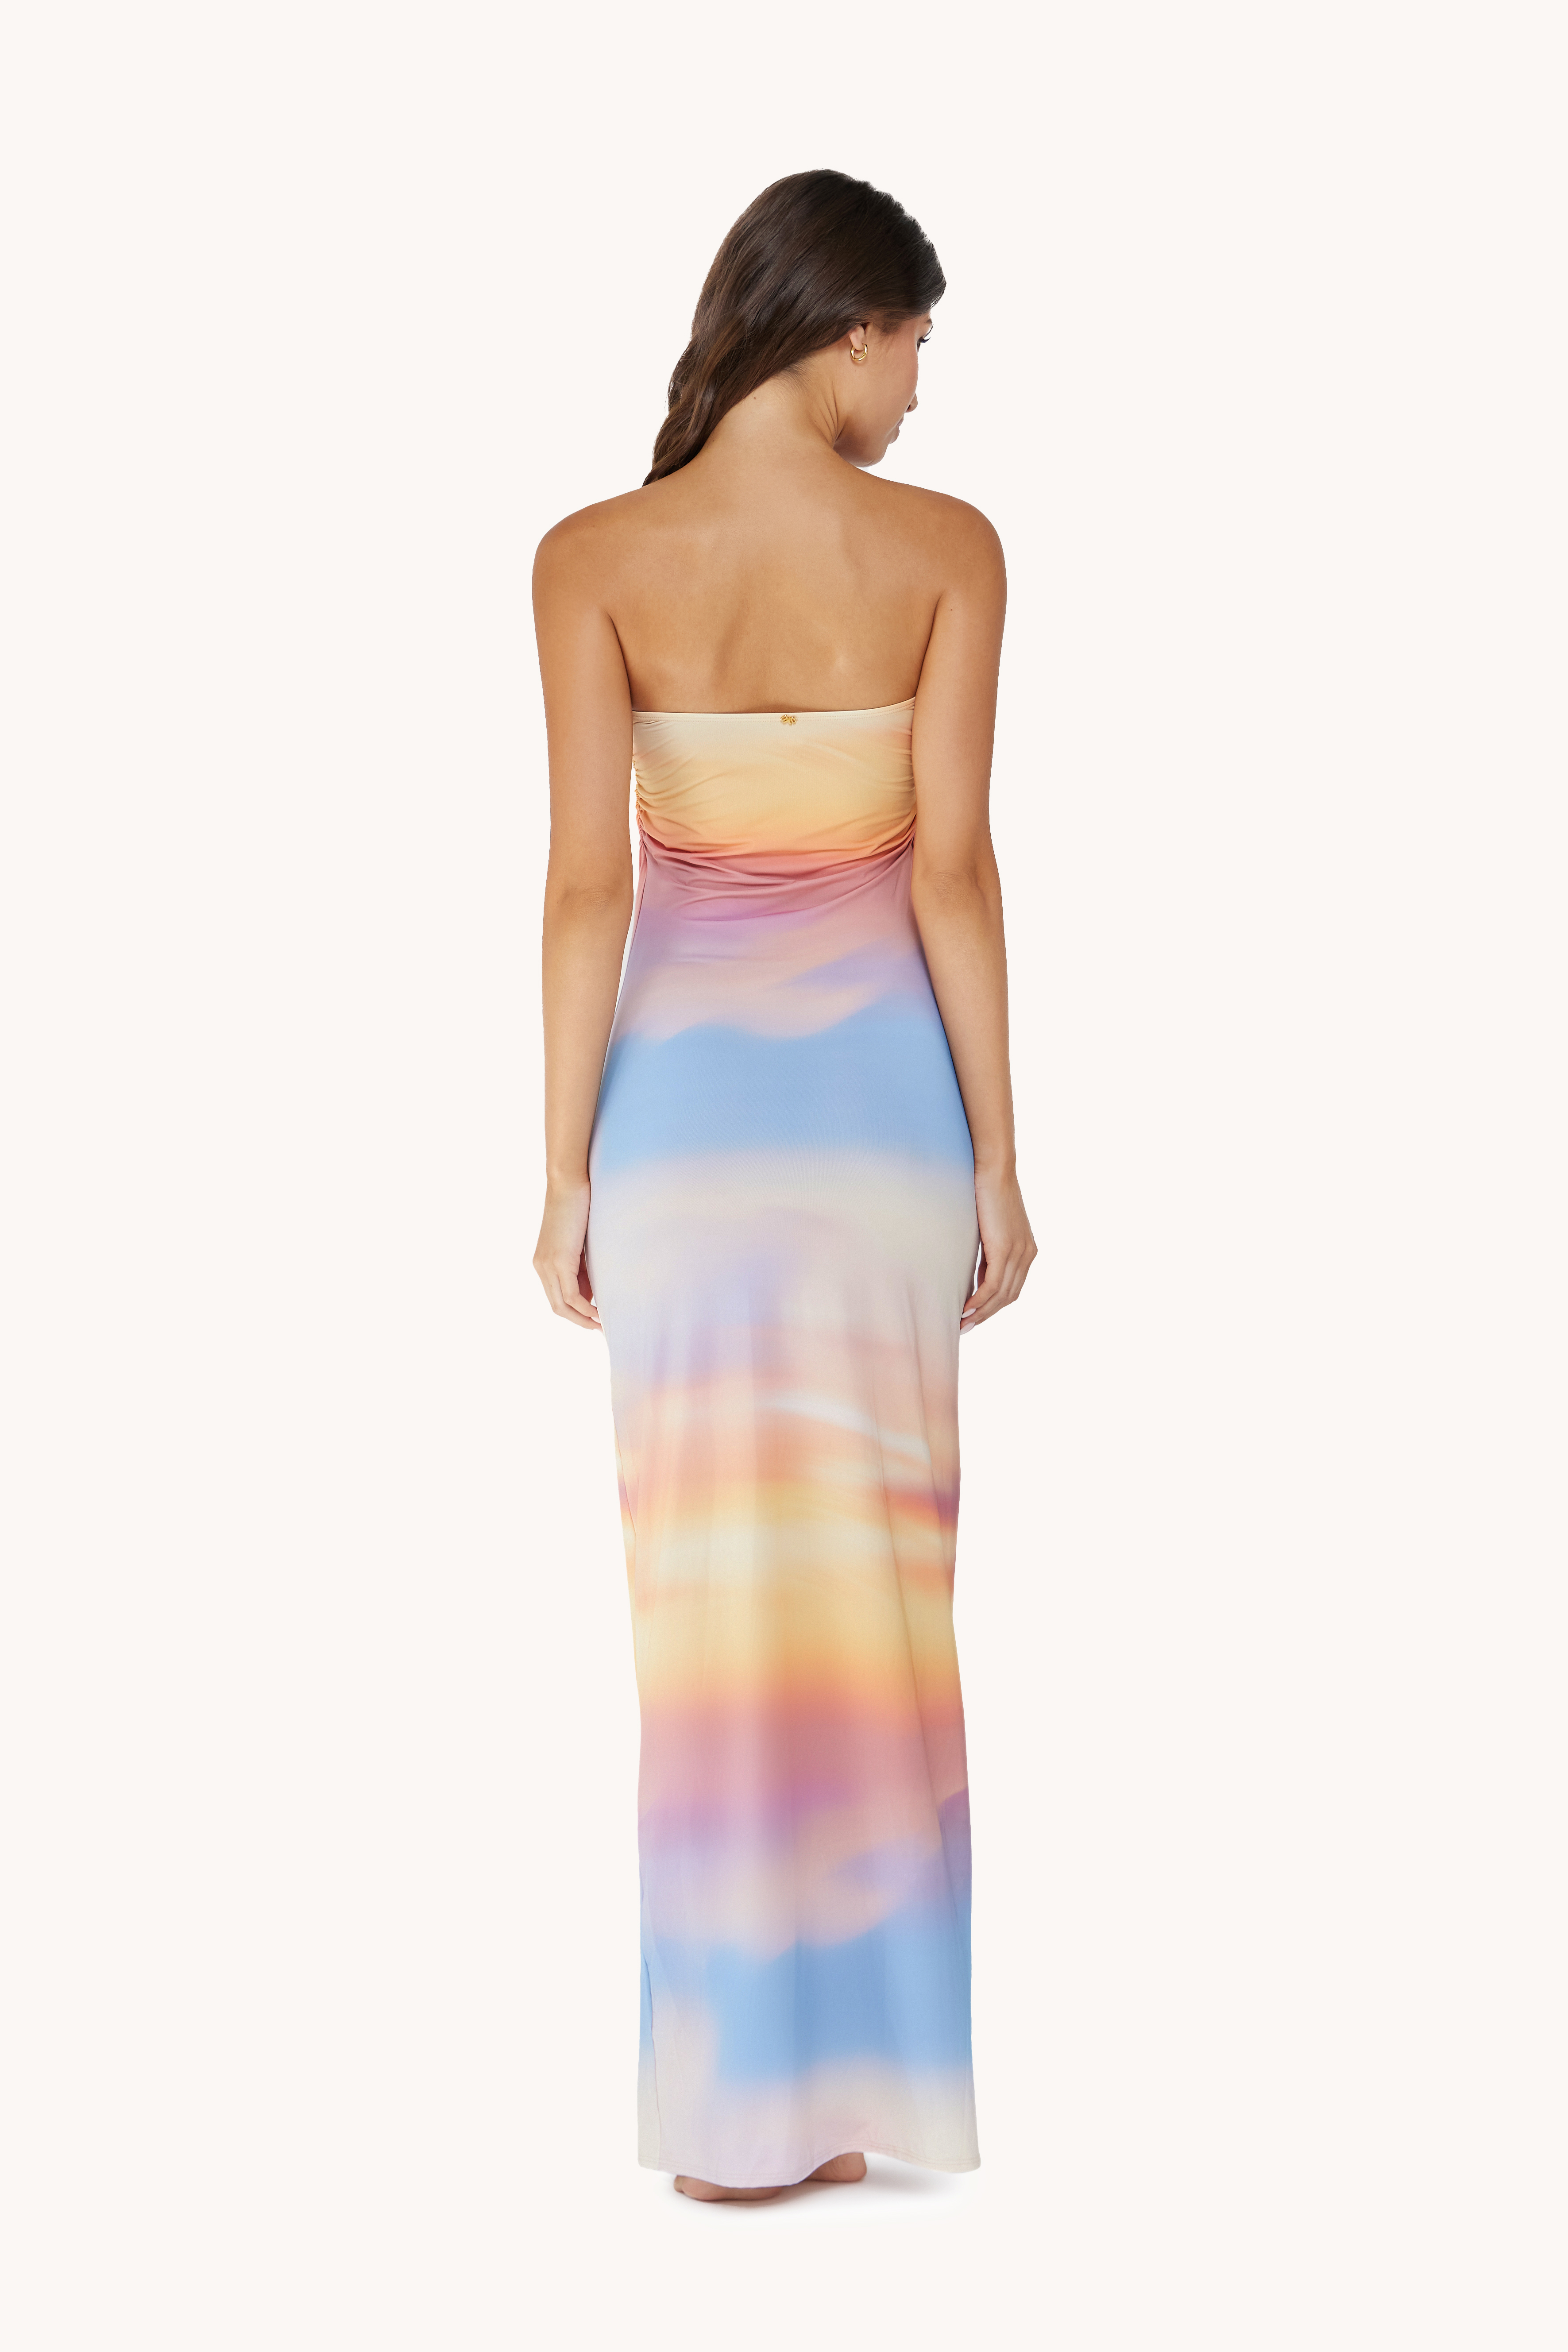 Shop The Look: Sunset Skies Mila Triangel Bikini + Strapless Jurk